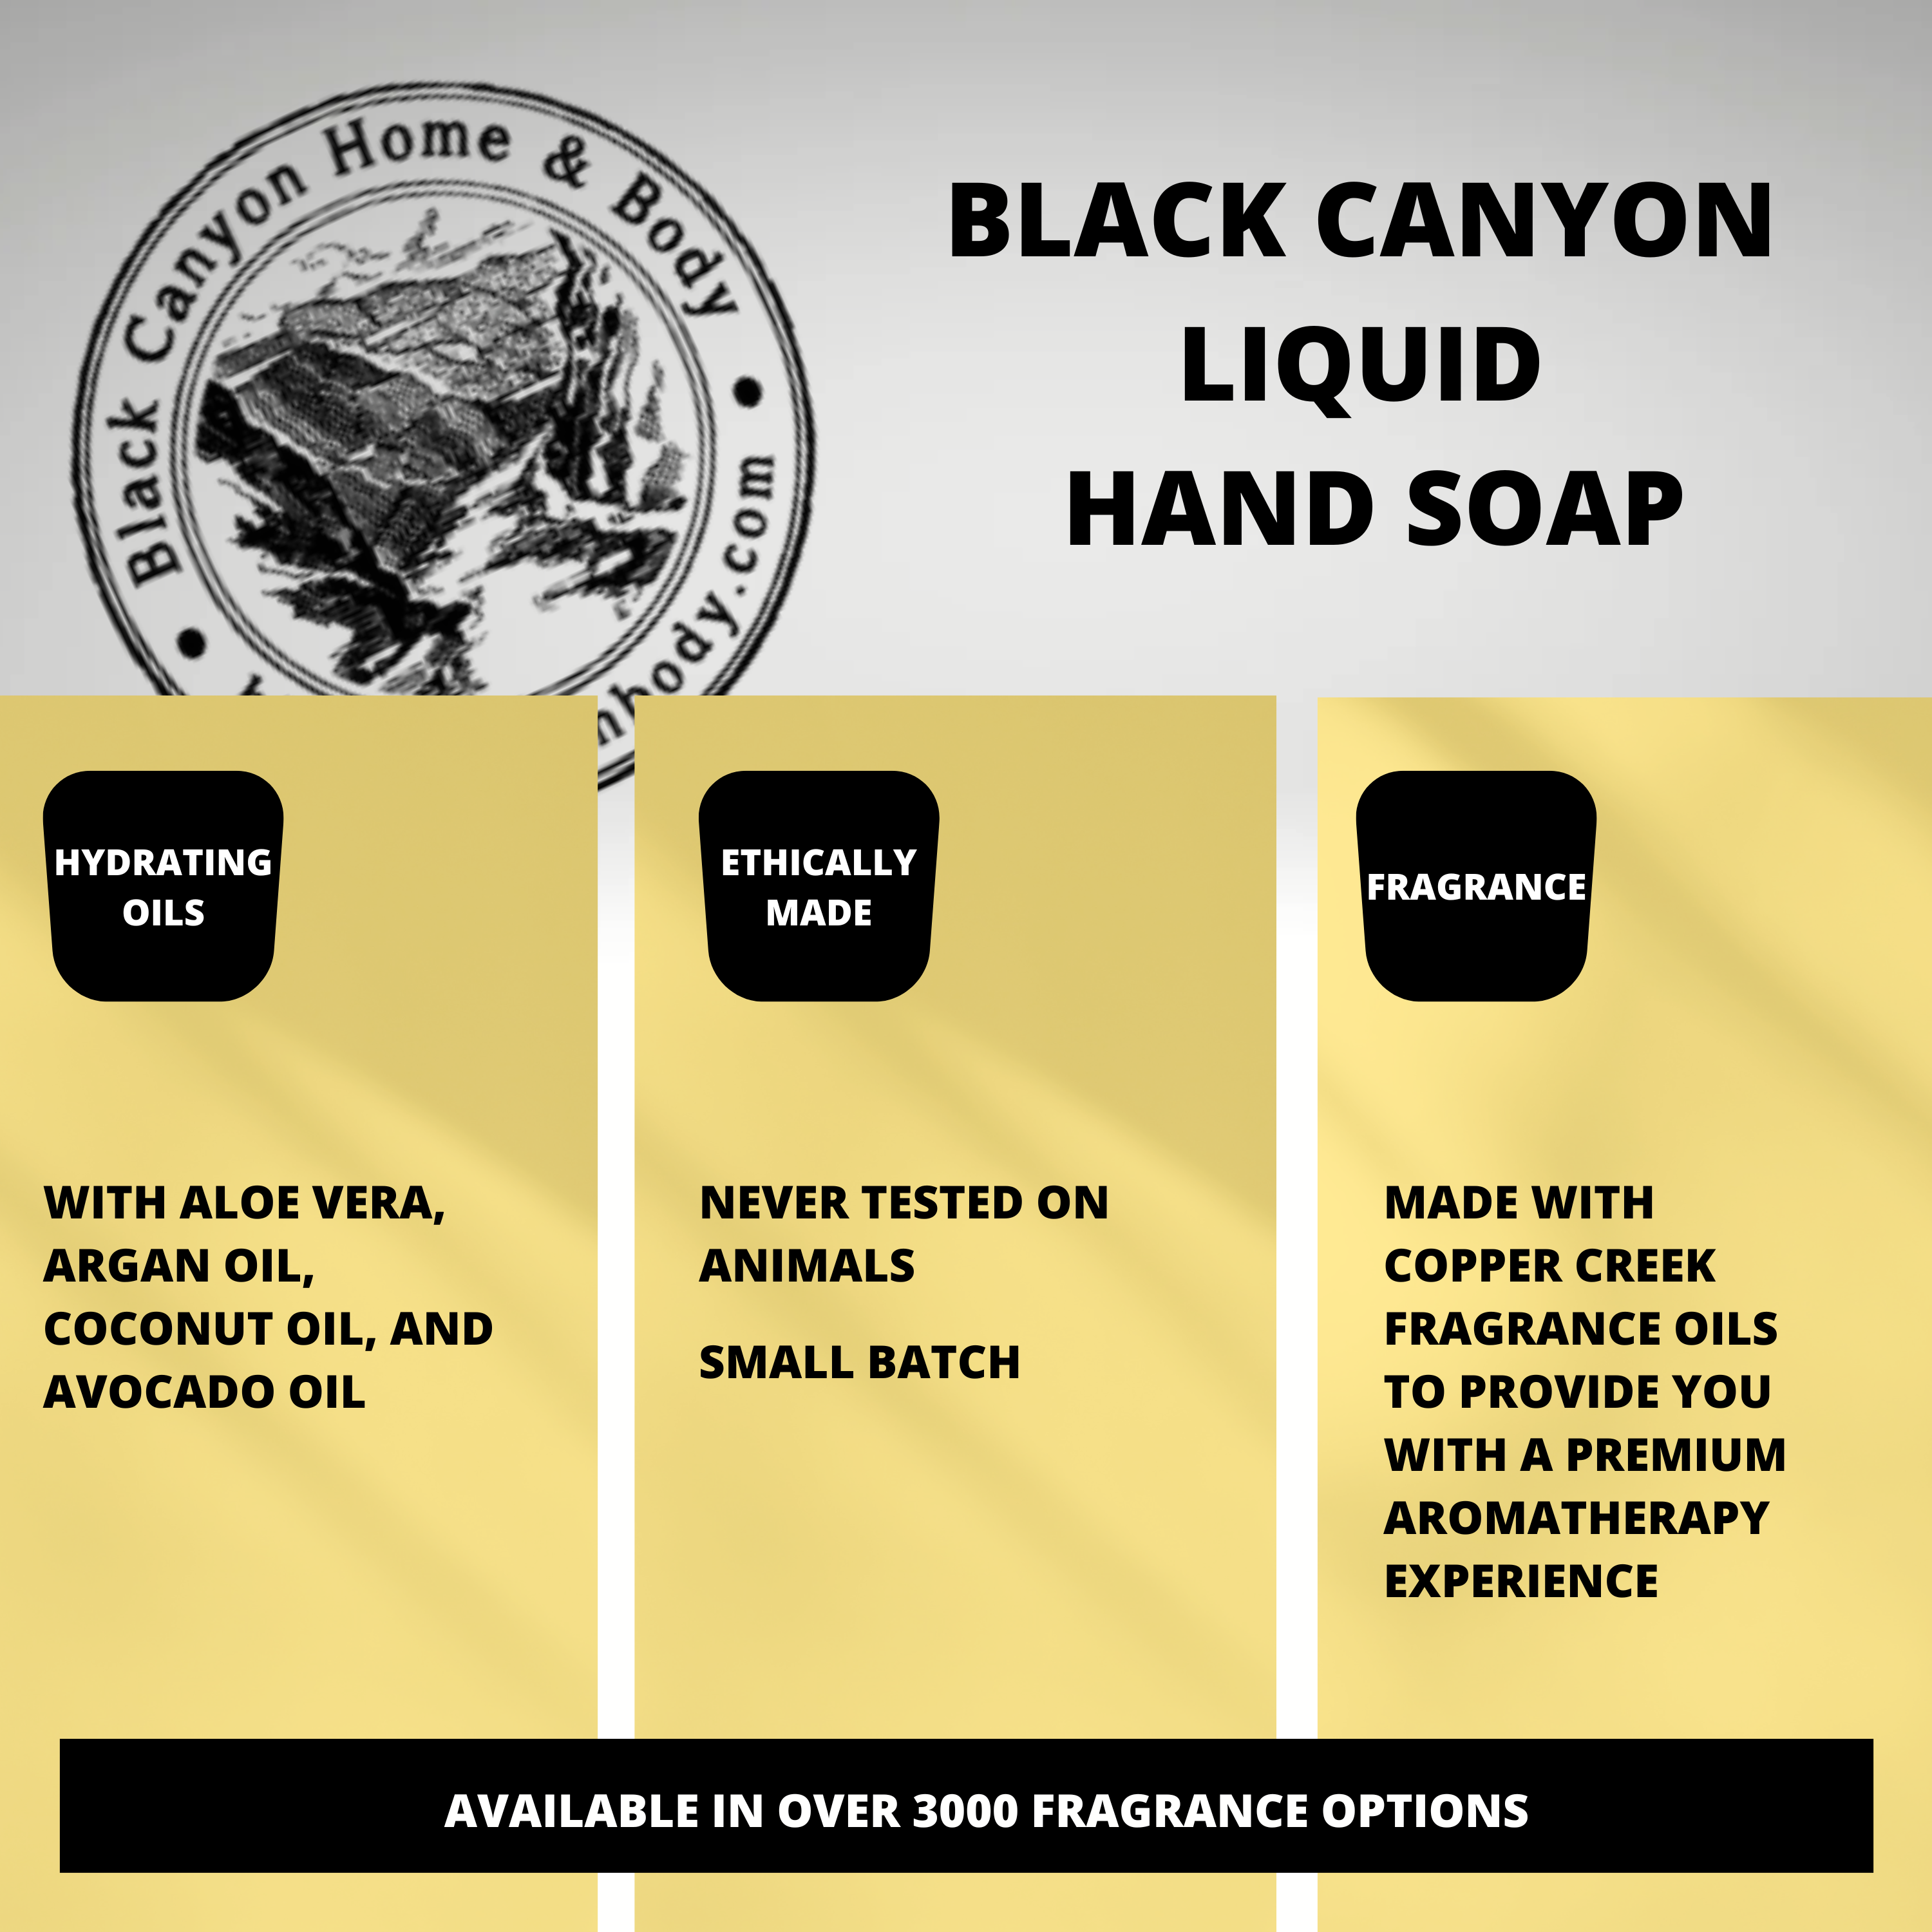 Black Canyon Egg Nog & Rum Scented Liquid Hand Soap